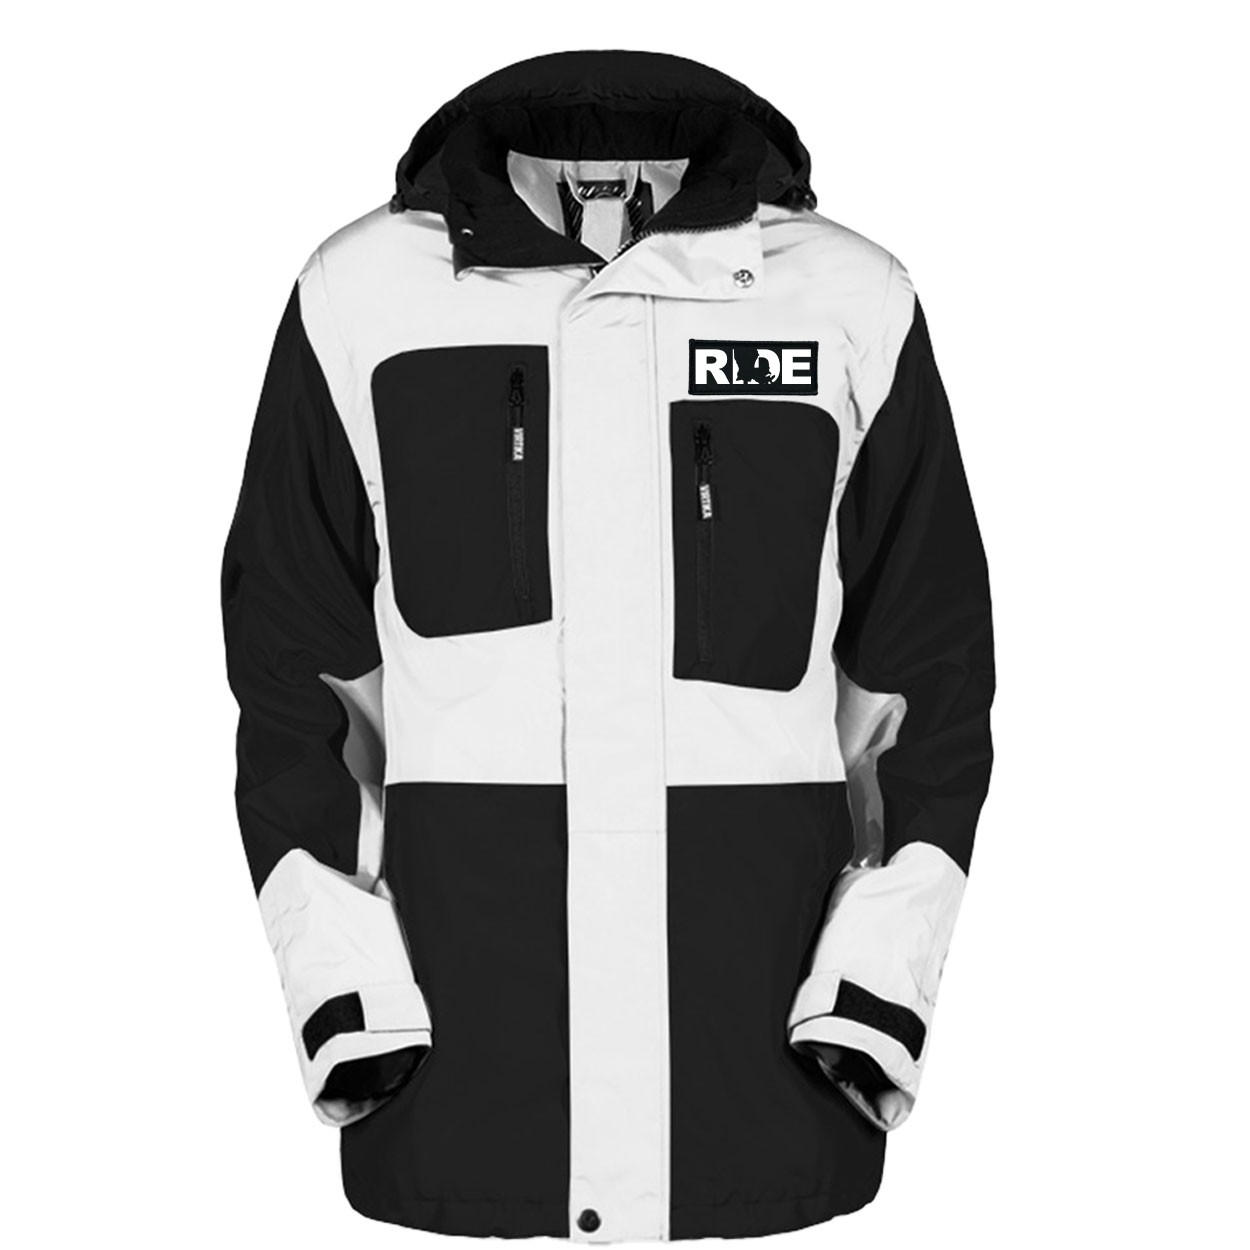 Ride Louisiana Pro Waterproof Breathable Winter Virtika Jacket Black/White (White Logo)